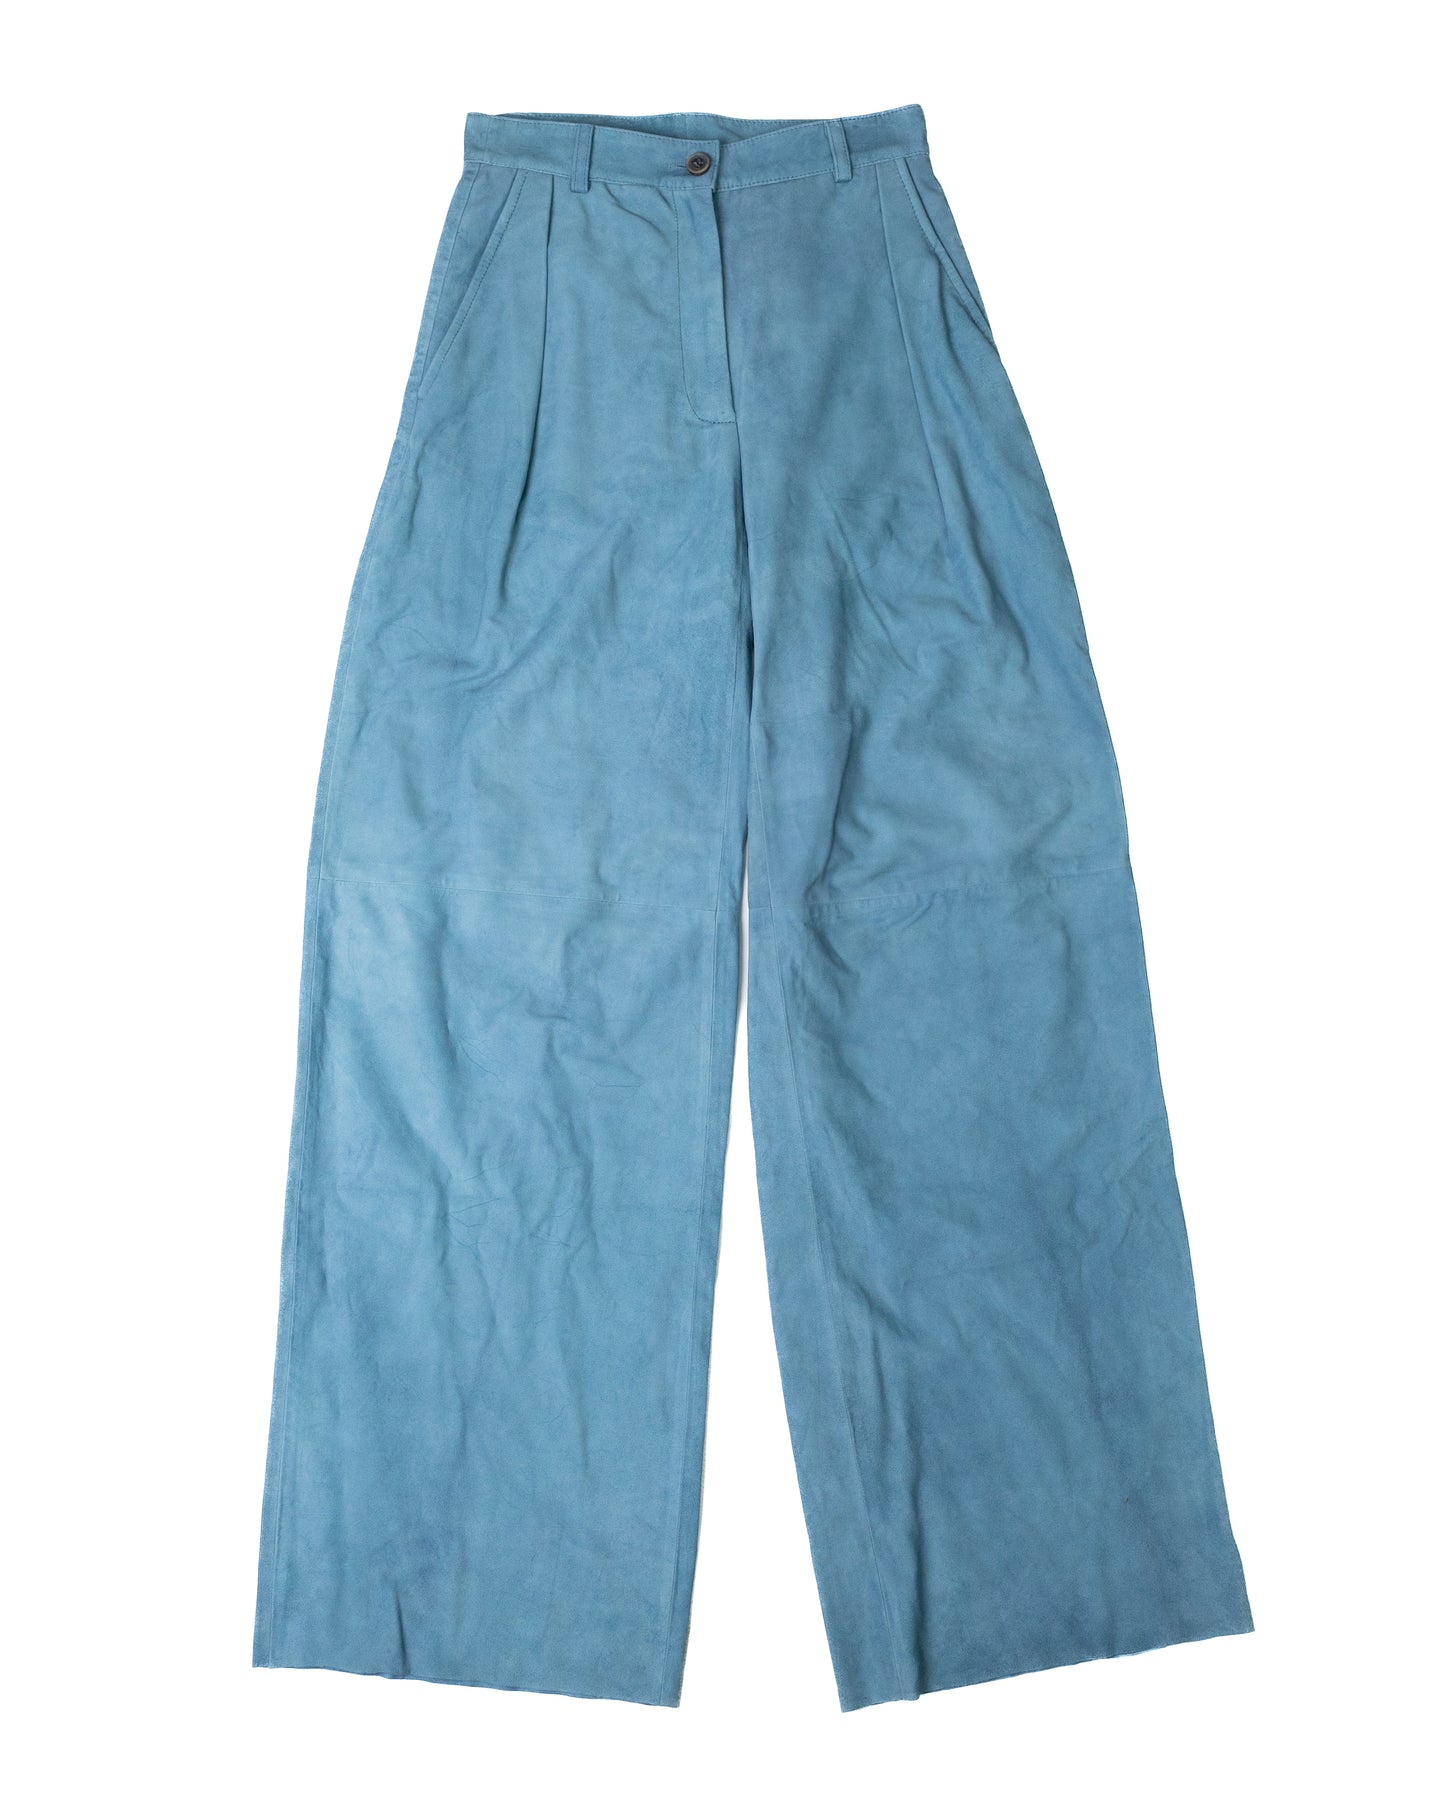 CLAUDIA trousers